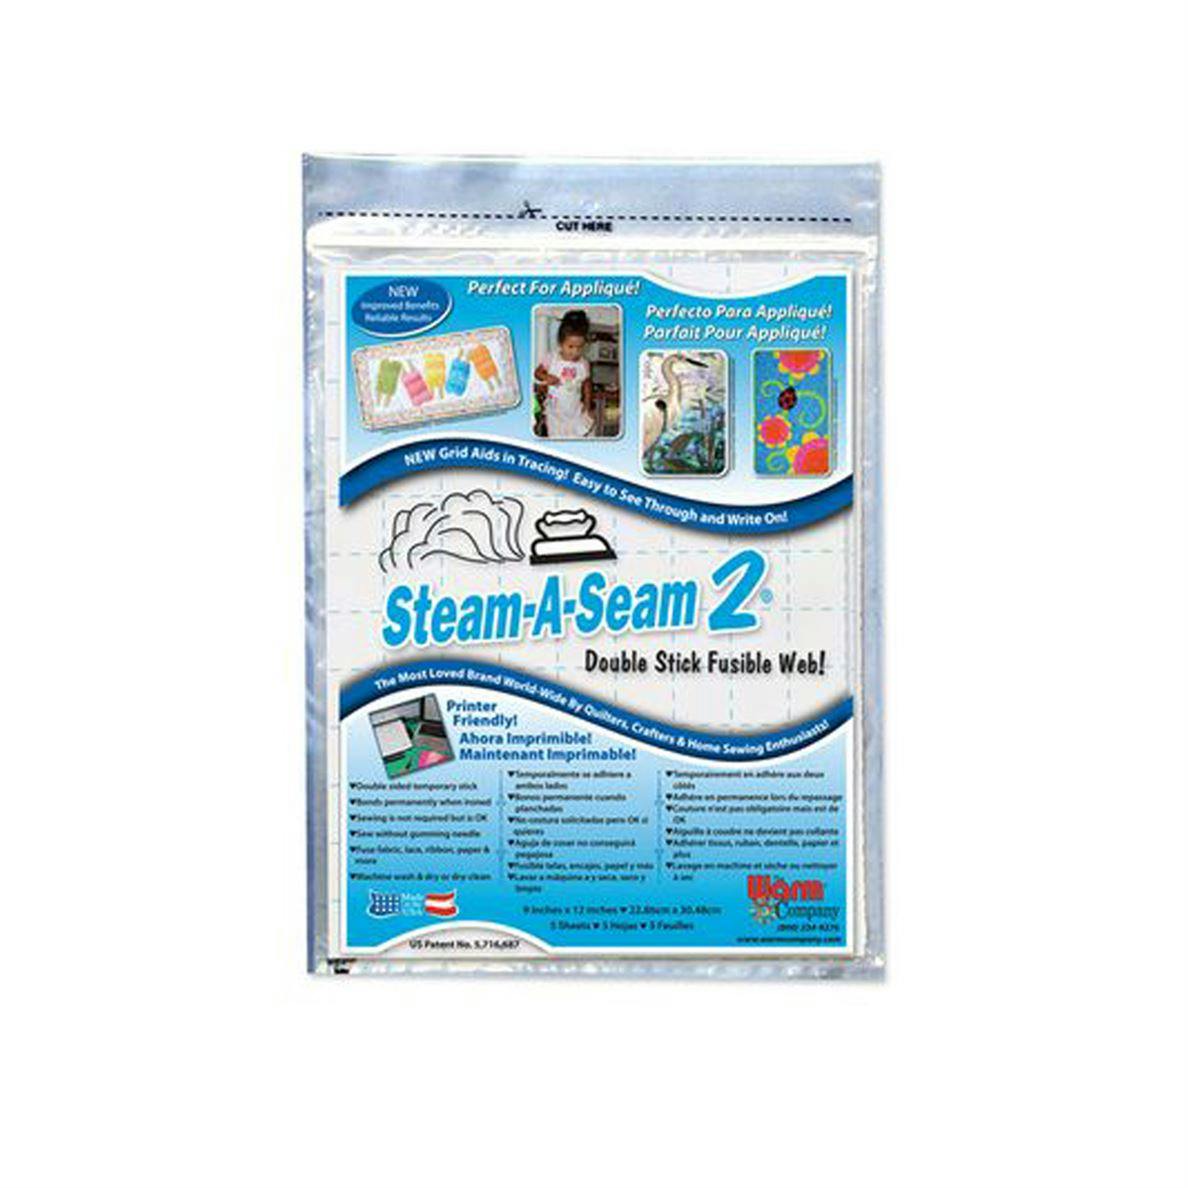 Package of Seam-a-Steam2